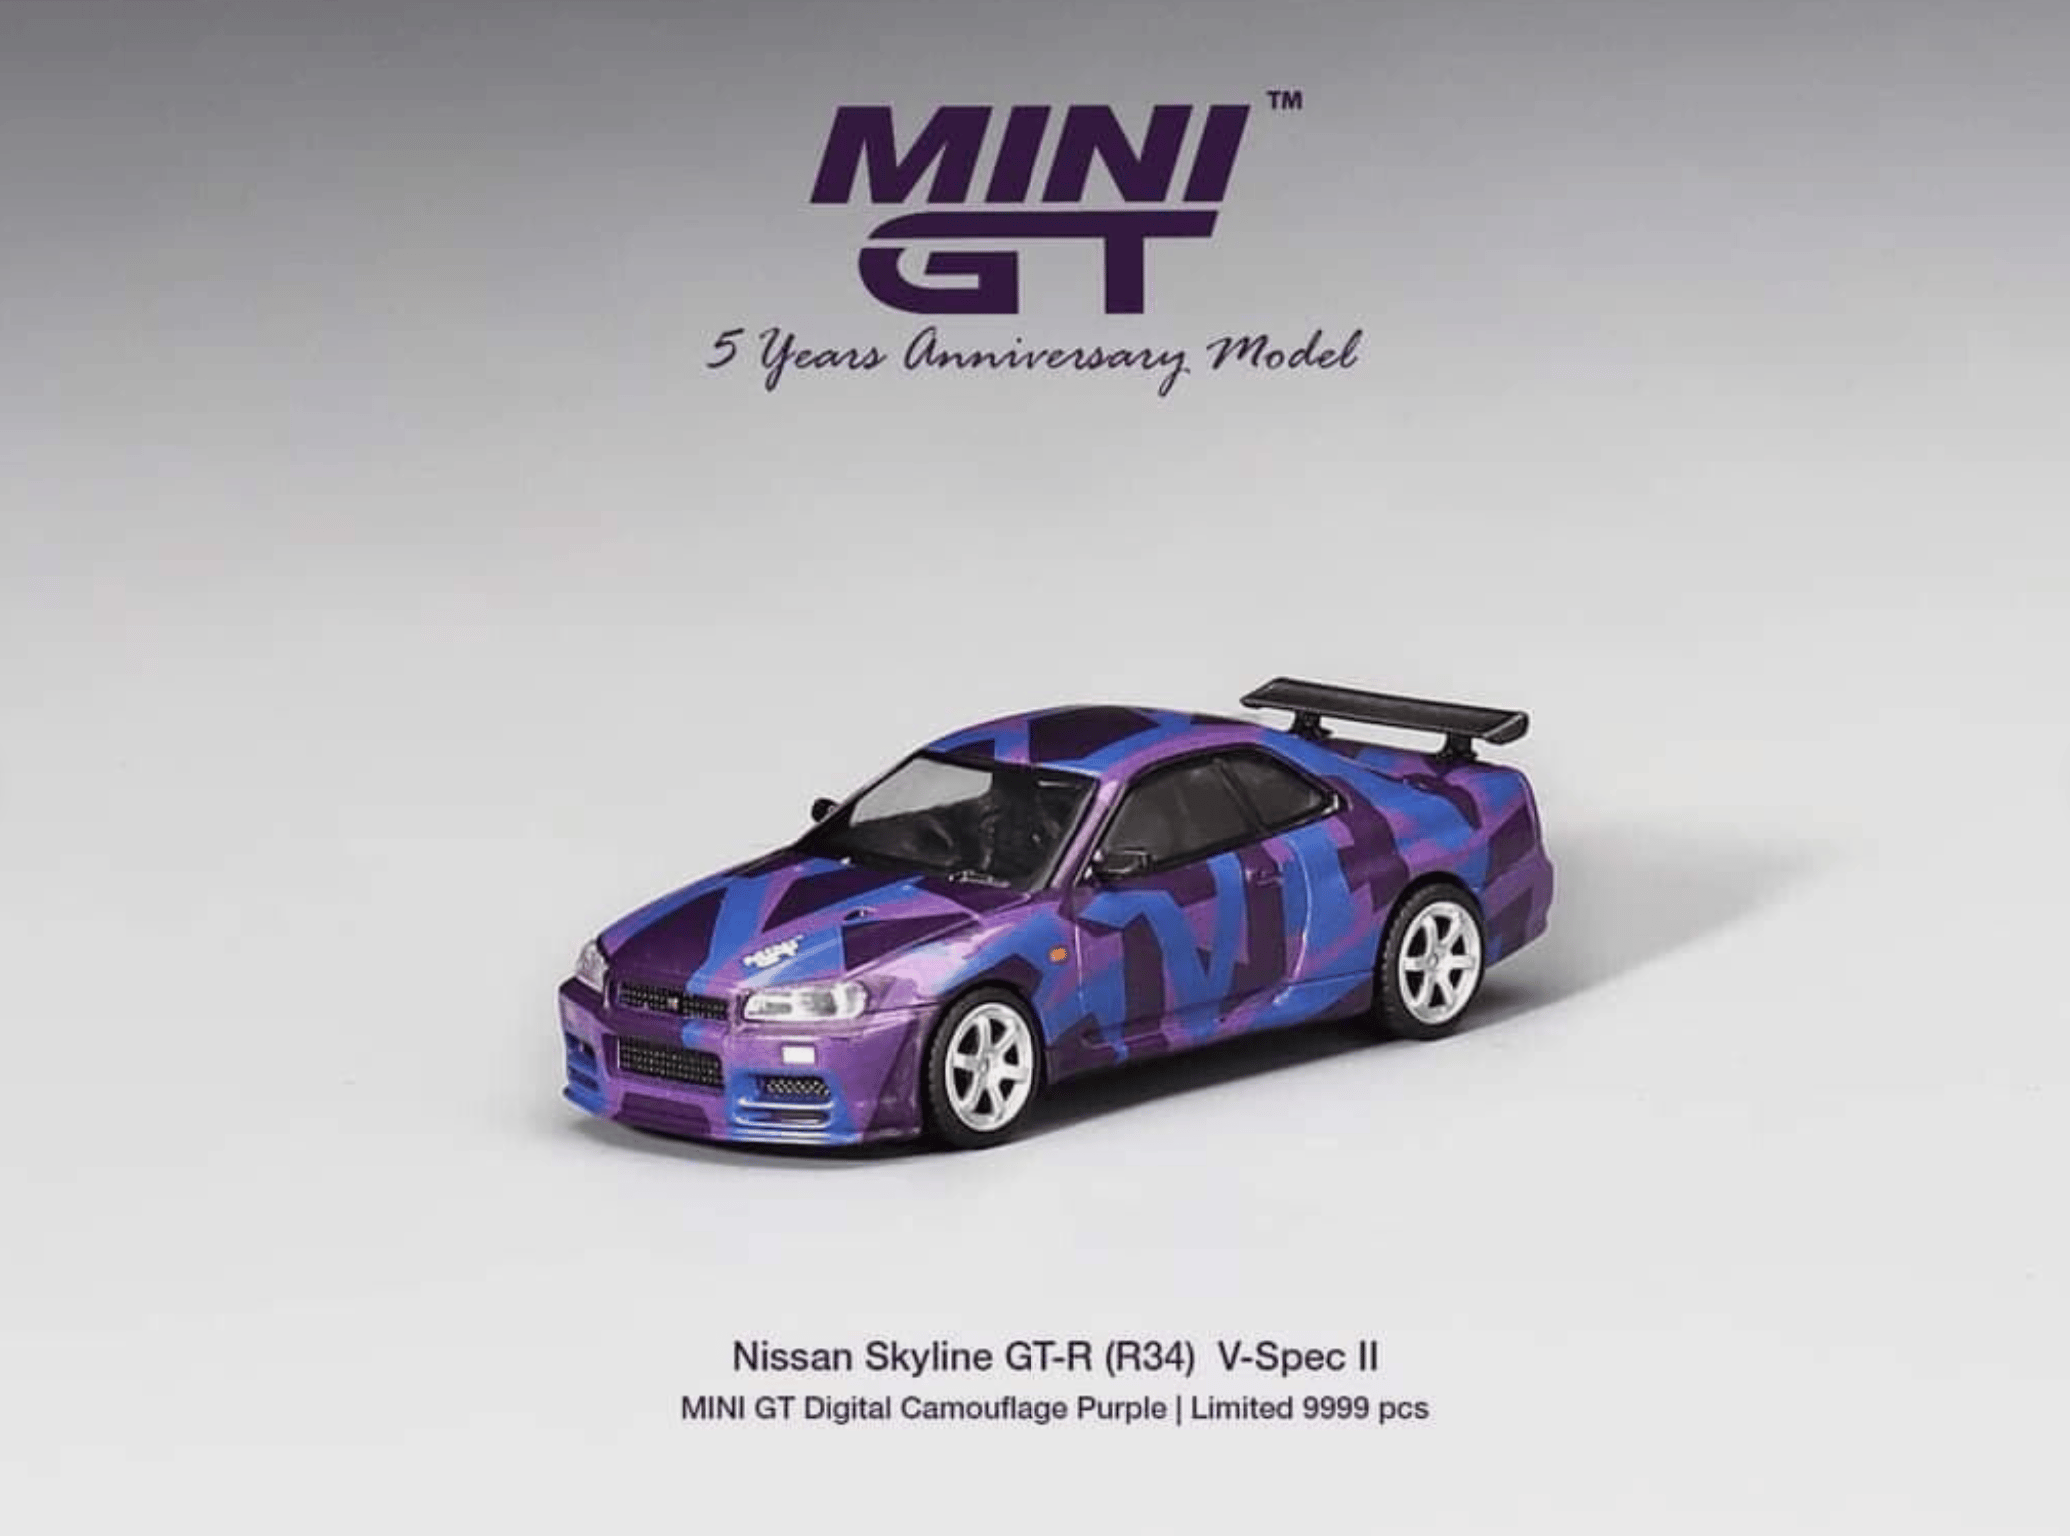 Mini GT Nissan Skyline GT-R R34 5 Years Aniversary| diecastpazar